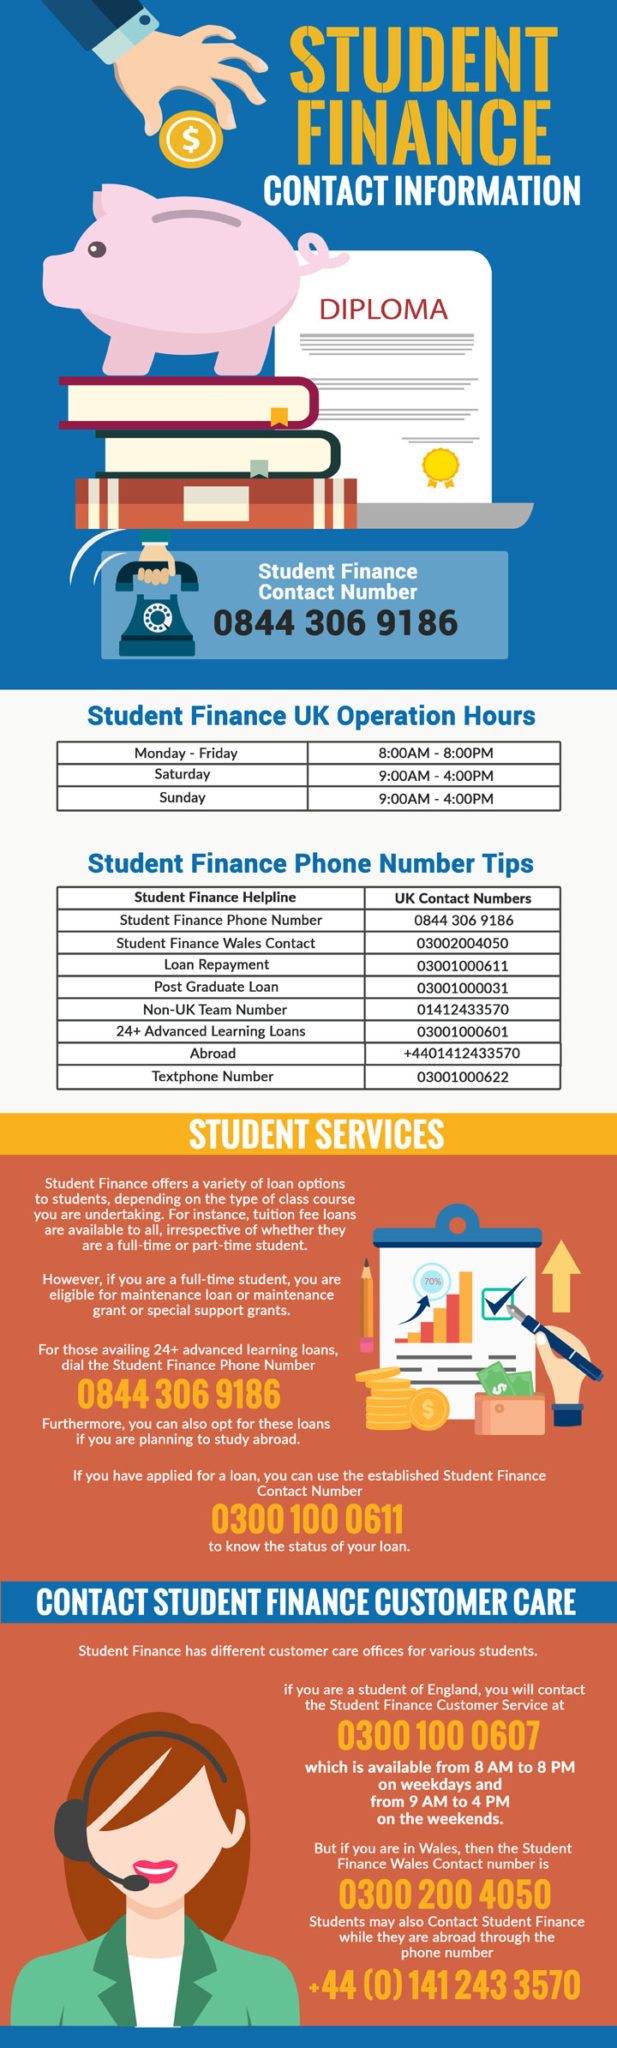 Student Finance Helpline